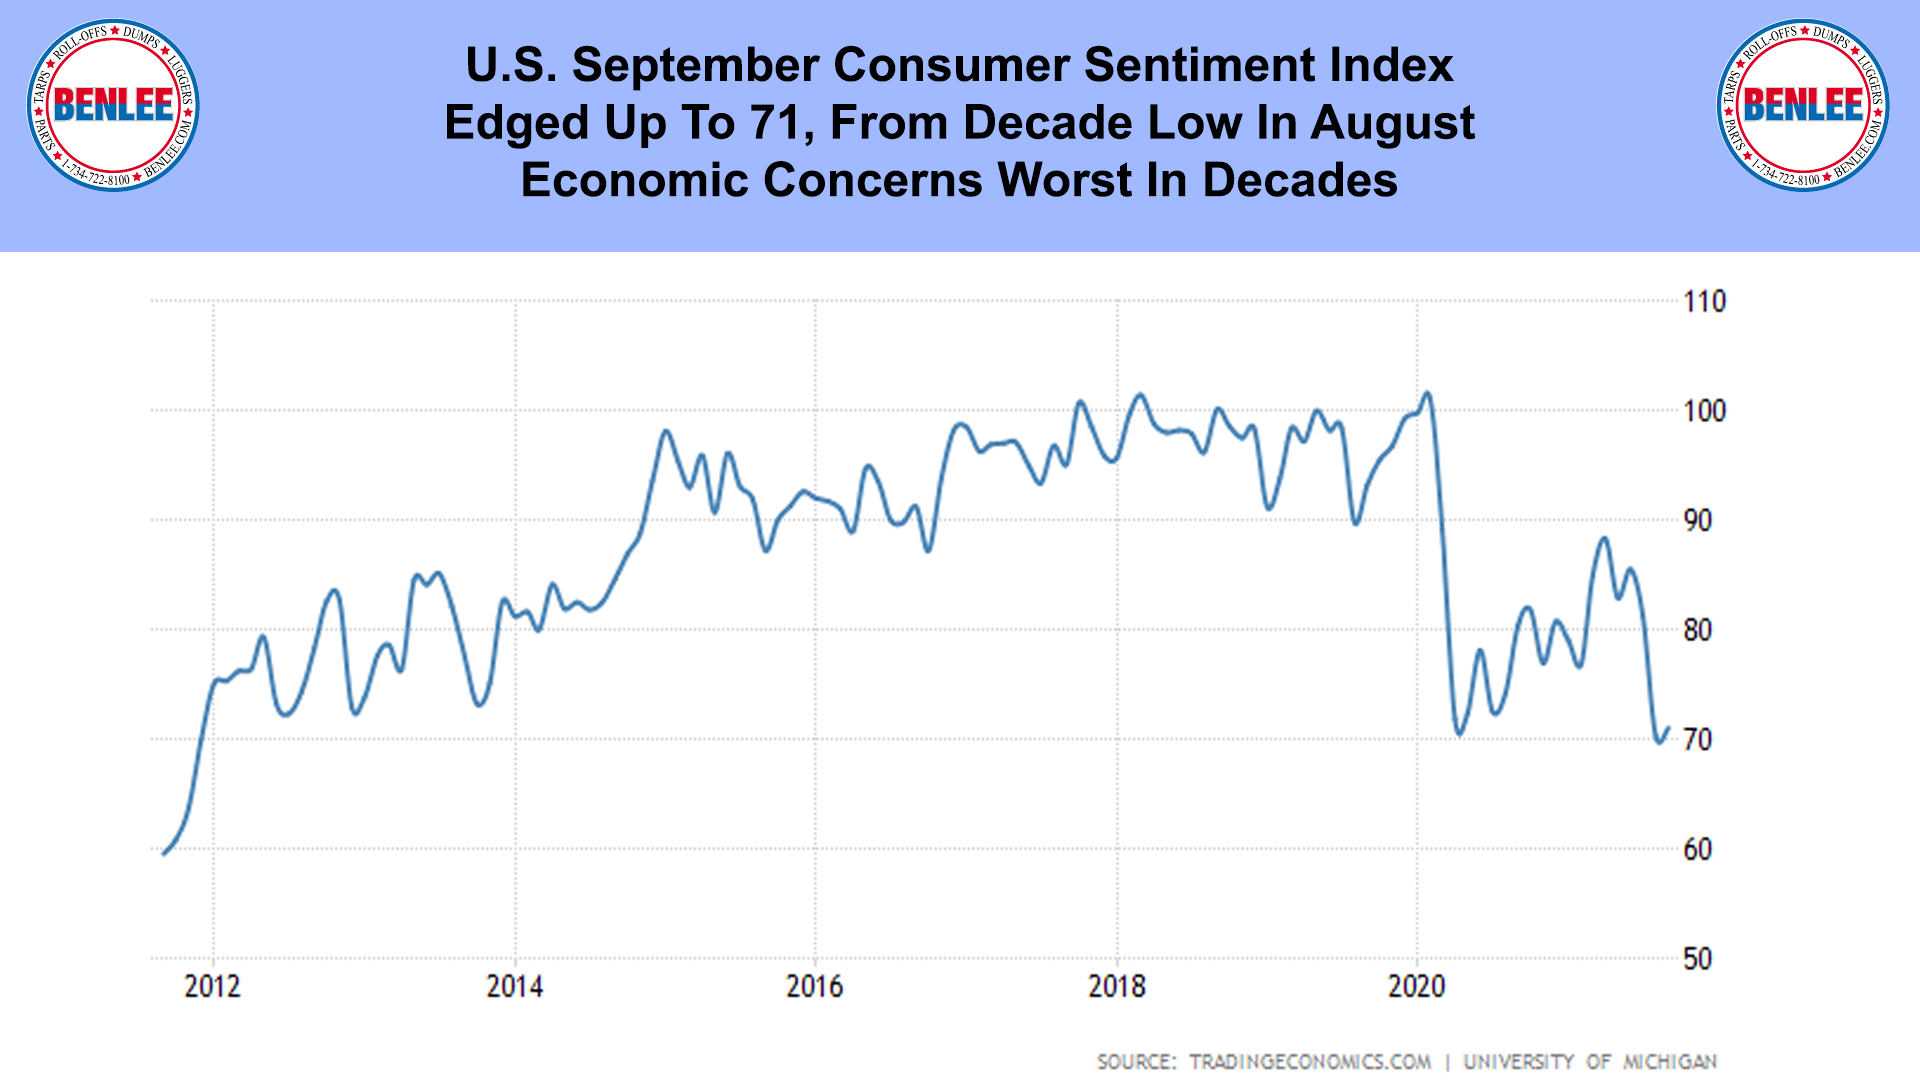 U.S. September Consumer Sentiment Index